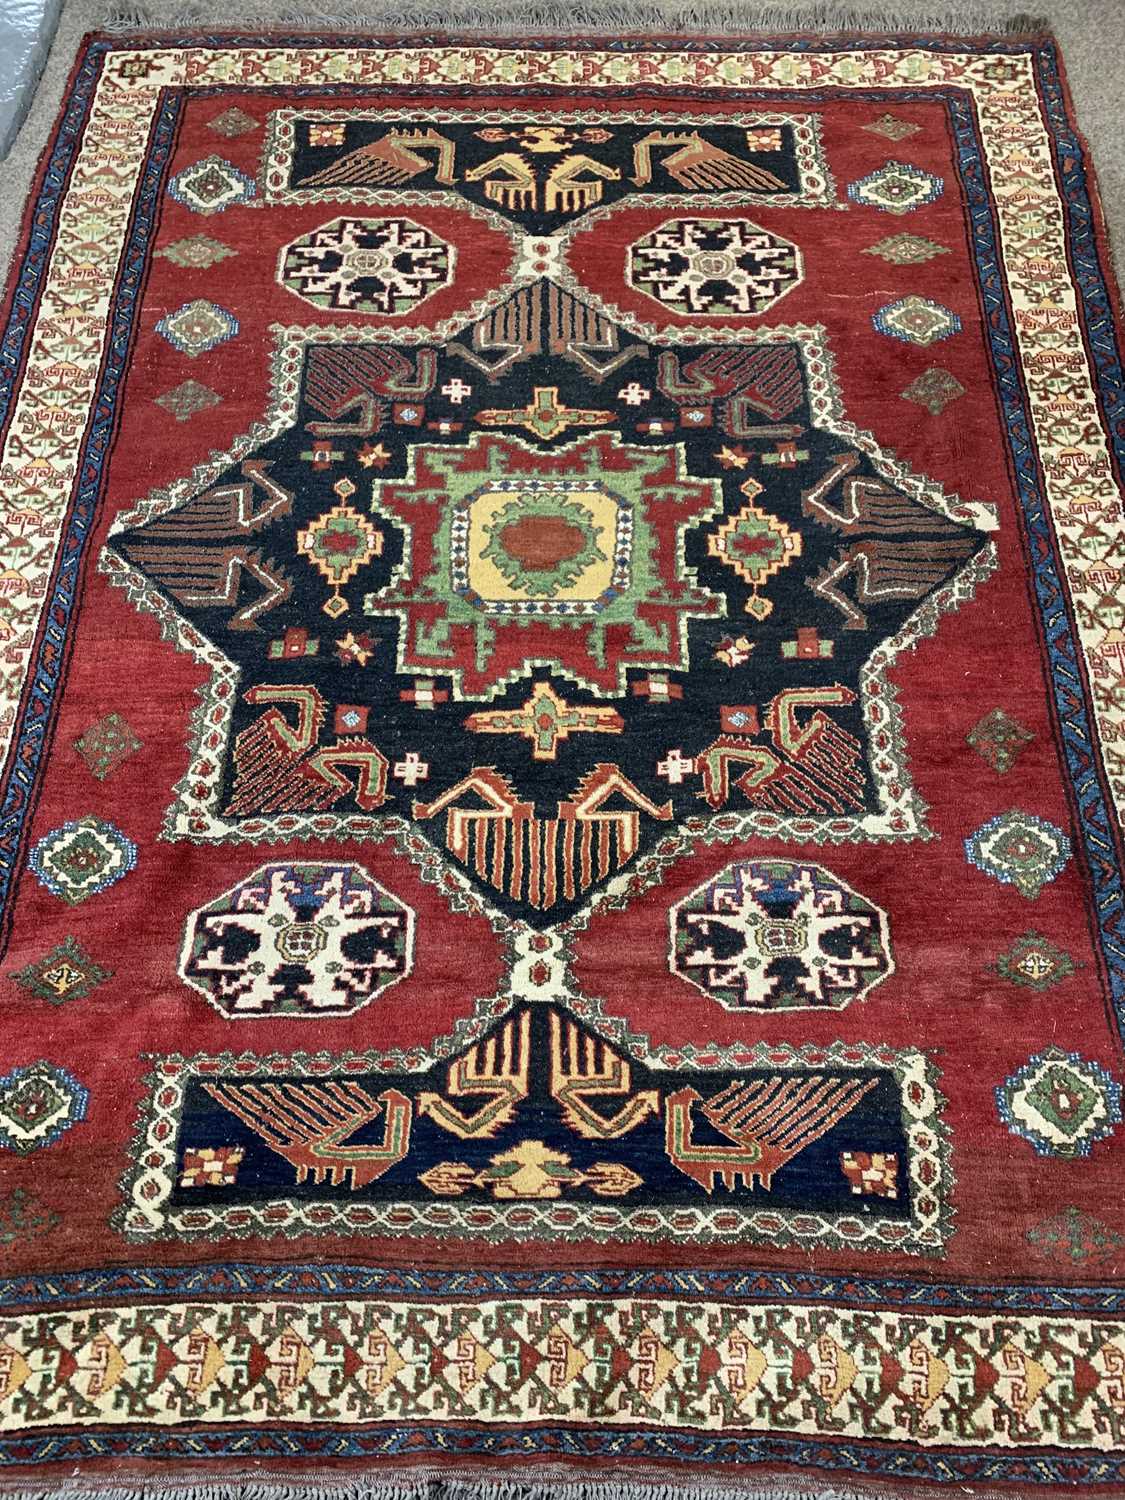 PERSIAN RED GROUND HANDMADE WOOL RUG, centre medallion, geometric border, 232 x 184cms Provenance: